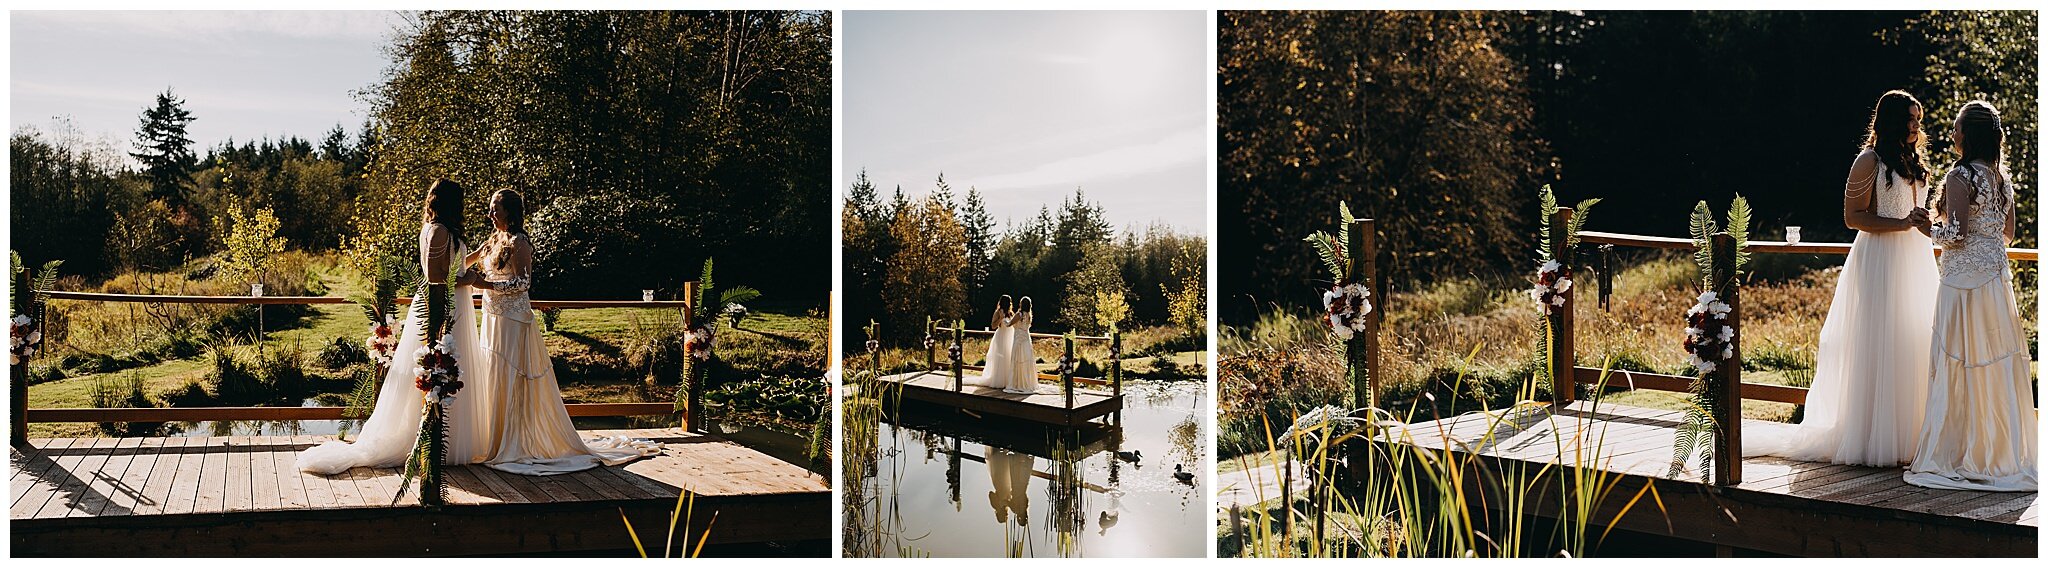 winlock-washington-backyard-wedding-ana-carly-jamie-buckley-photography-27.jpg